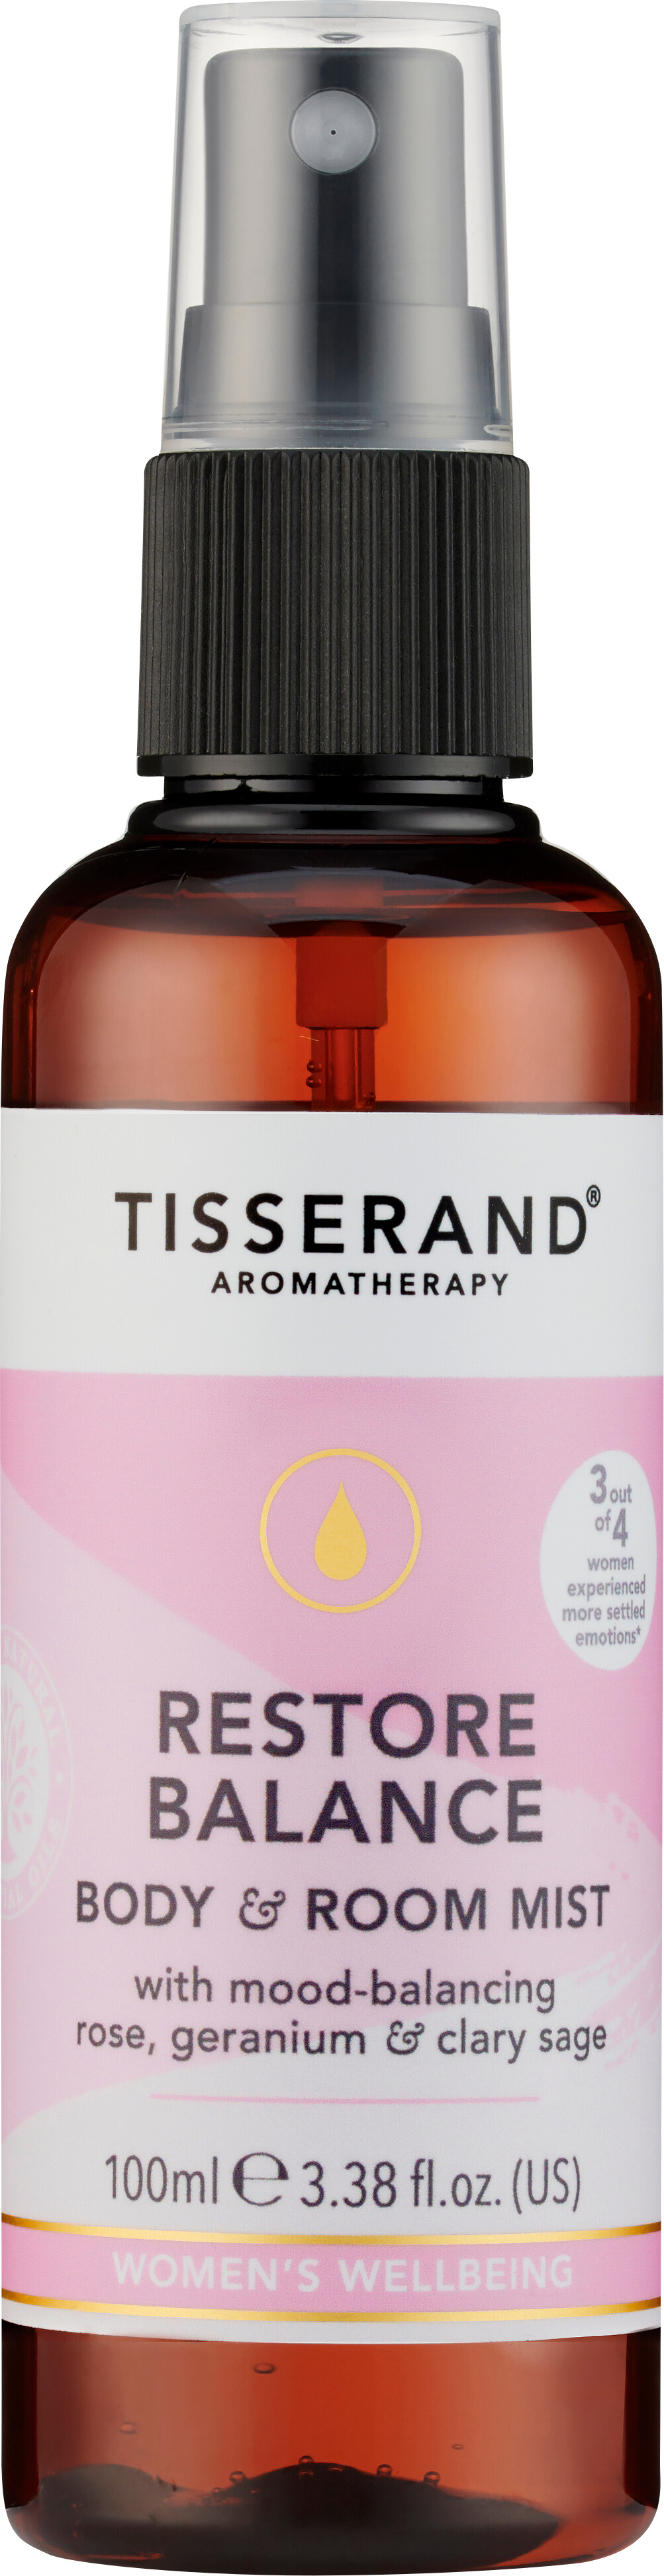 Tisserand Aromatherapy Restore Balance Body & Room Mist 100ml